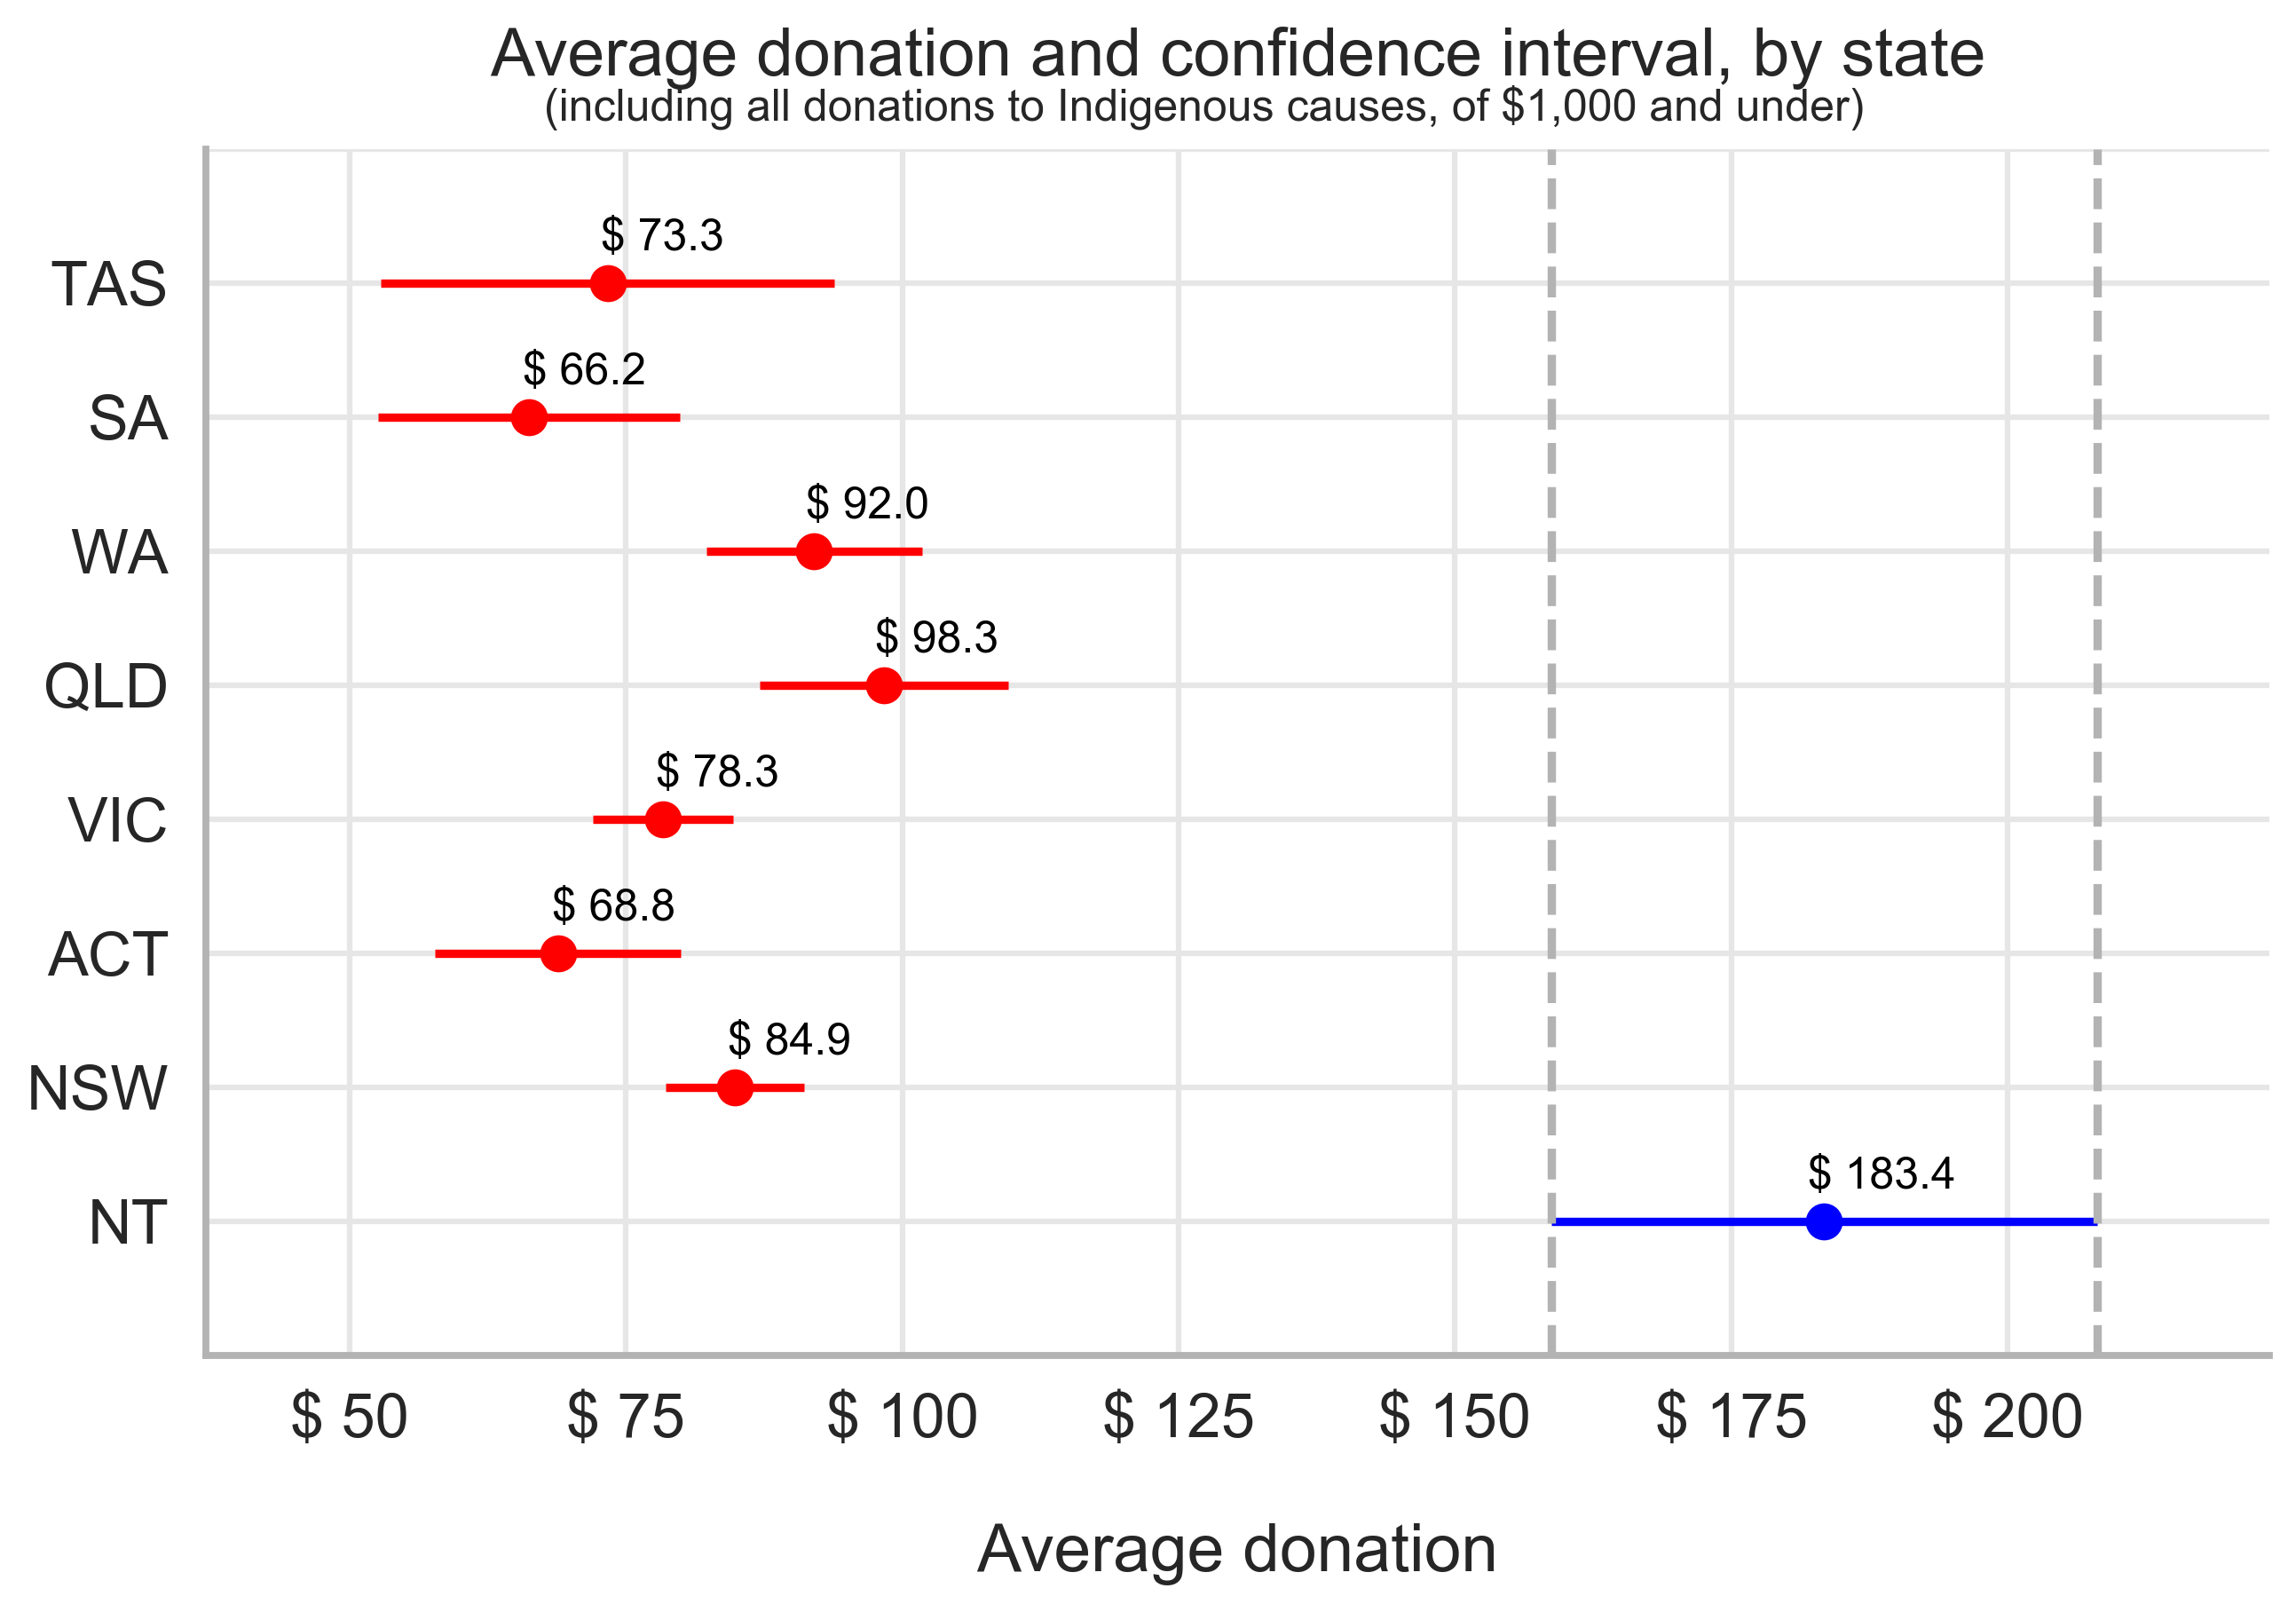 Figure 4B - NT average donation ranking - indigenous - 1000 and under